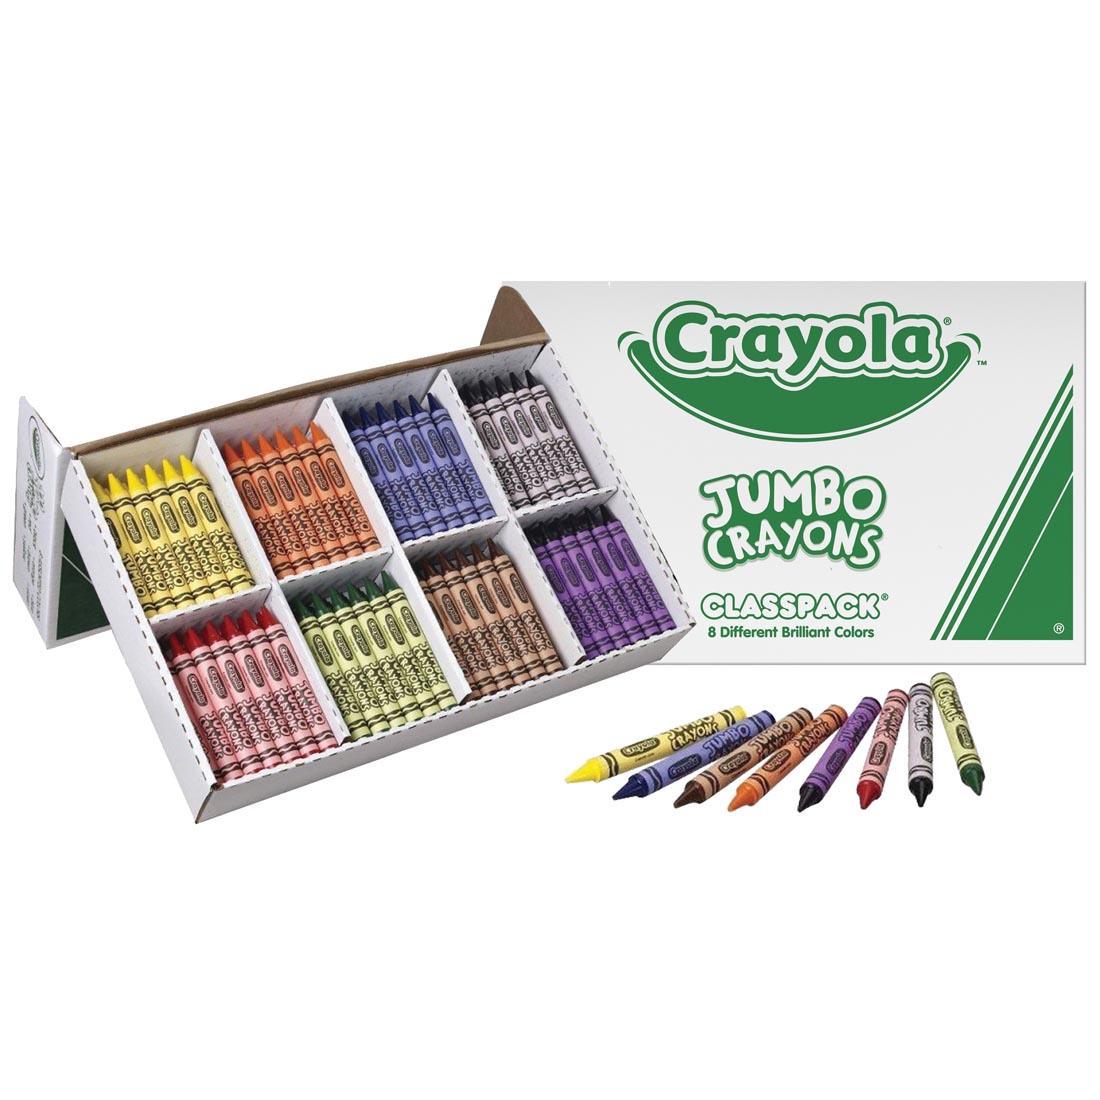 Crayola Jumbo Crayons Classpack box shown both open and closed